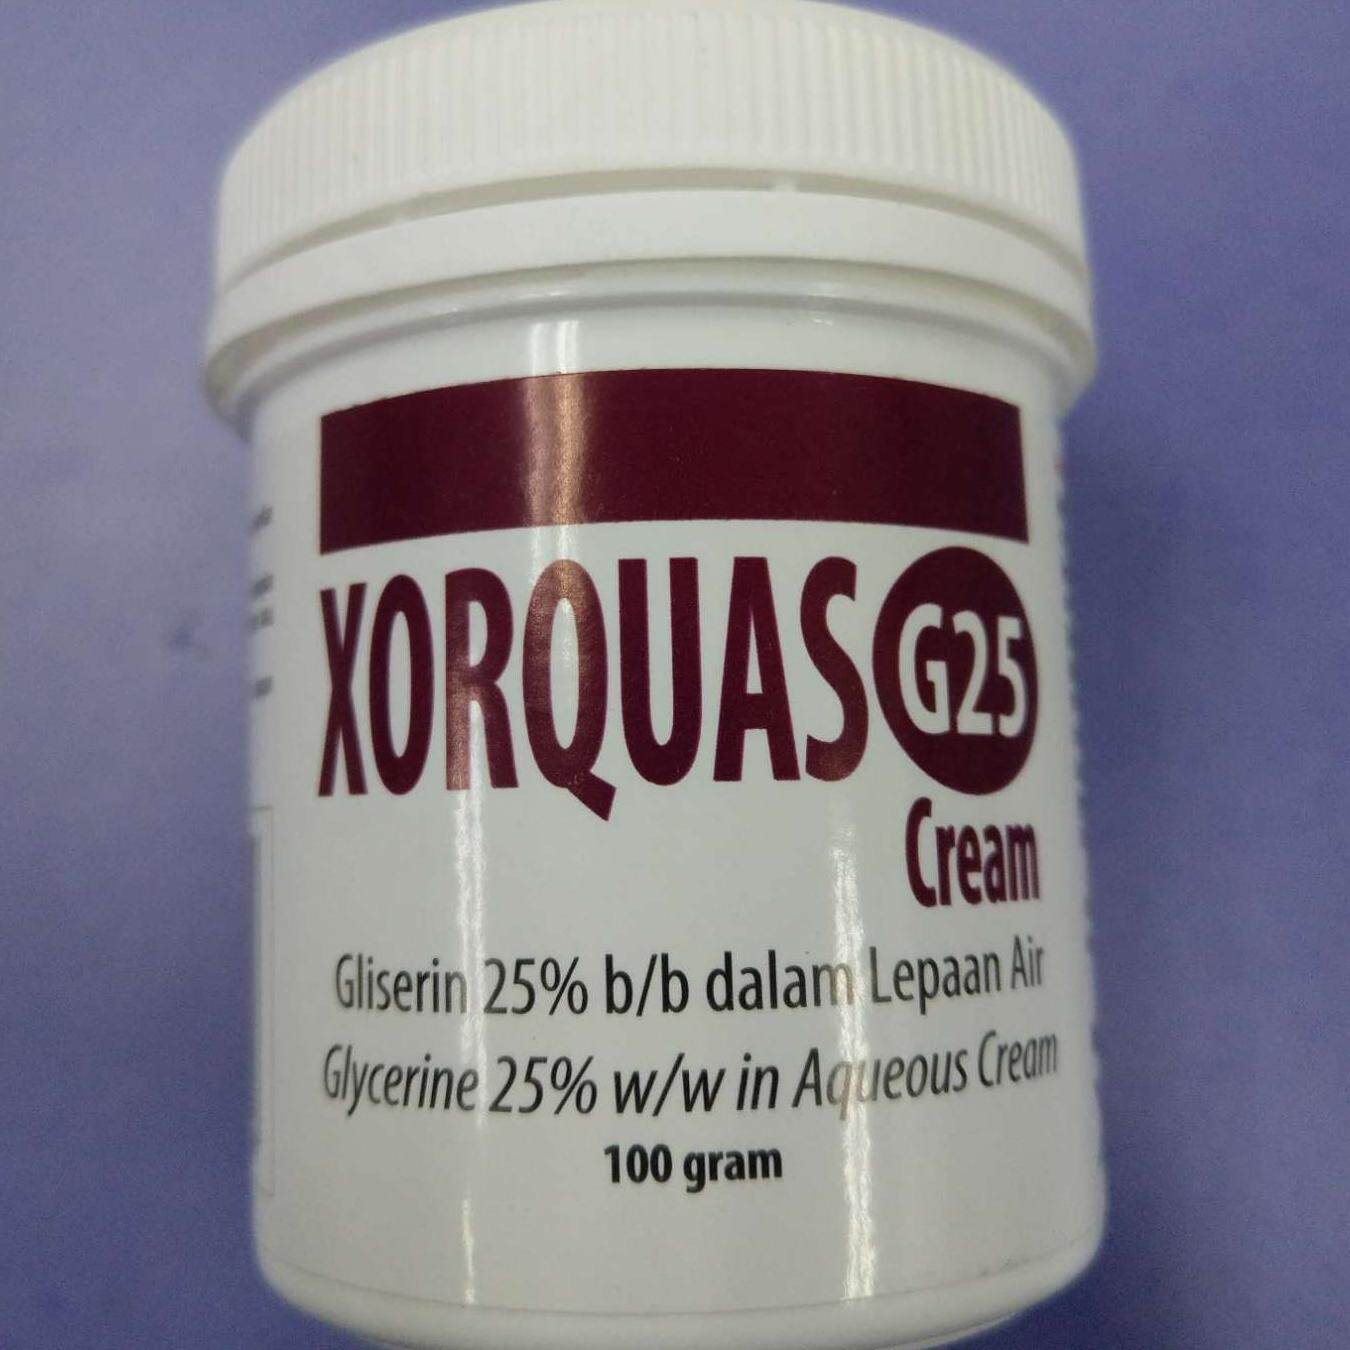 Xorquas Cream G25 Price Promotion Jun 2021 Biggo Malaysia